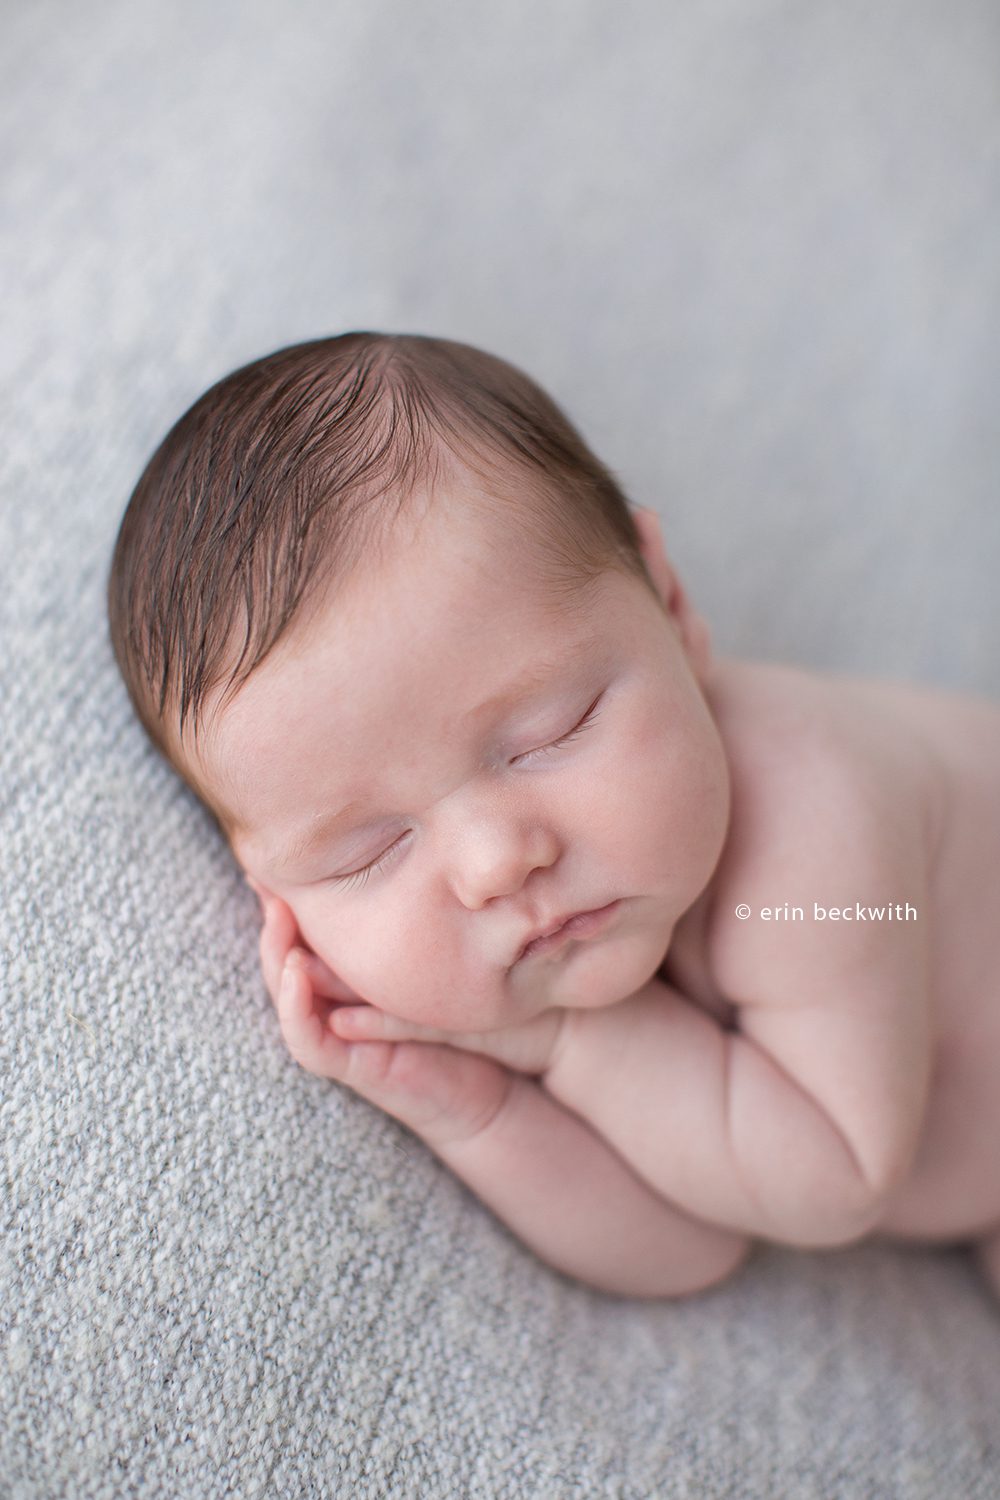 erin beckwith photography, houston newborn photographer, houston newborn photography